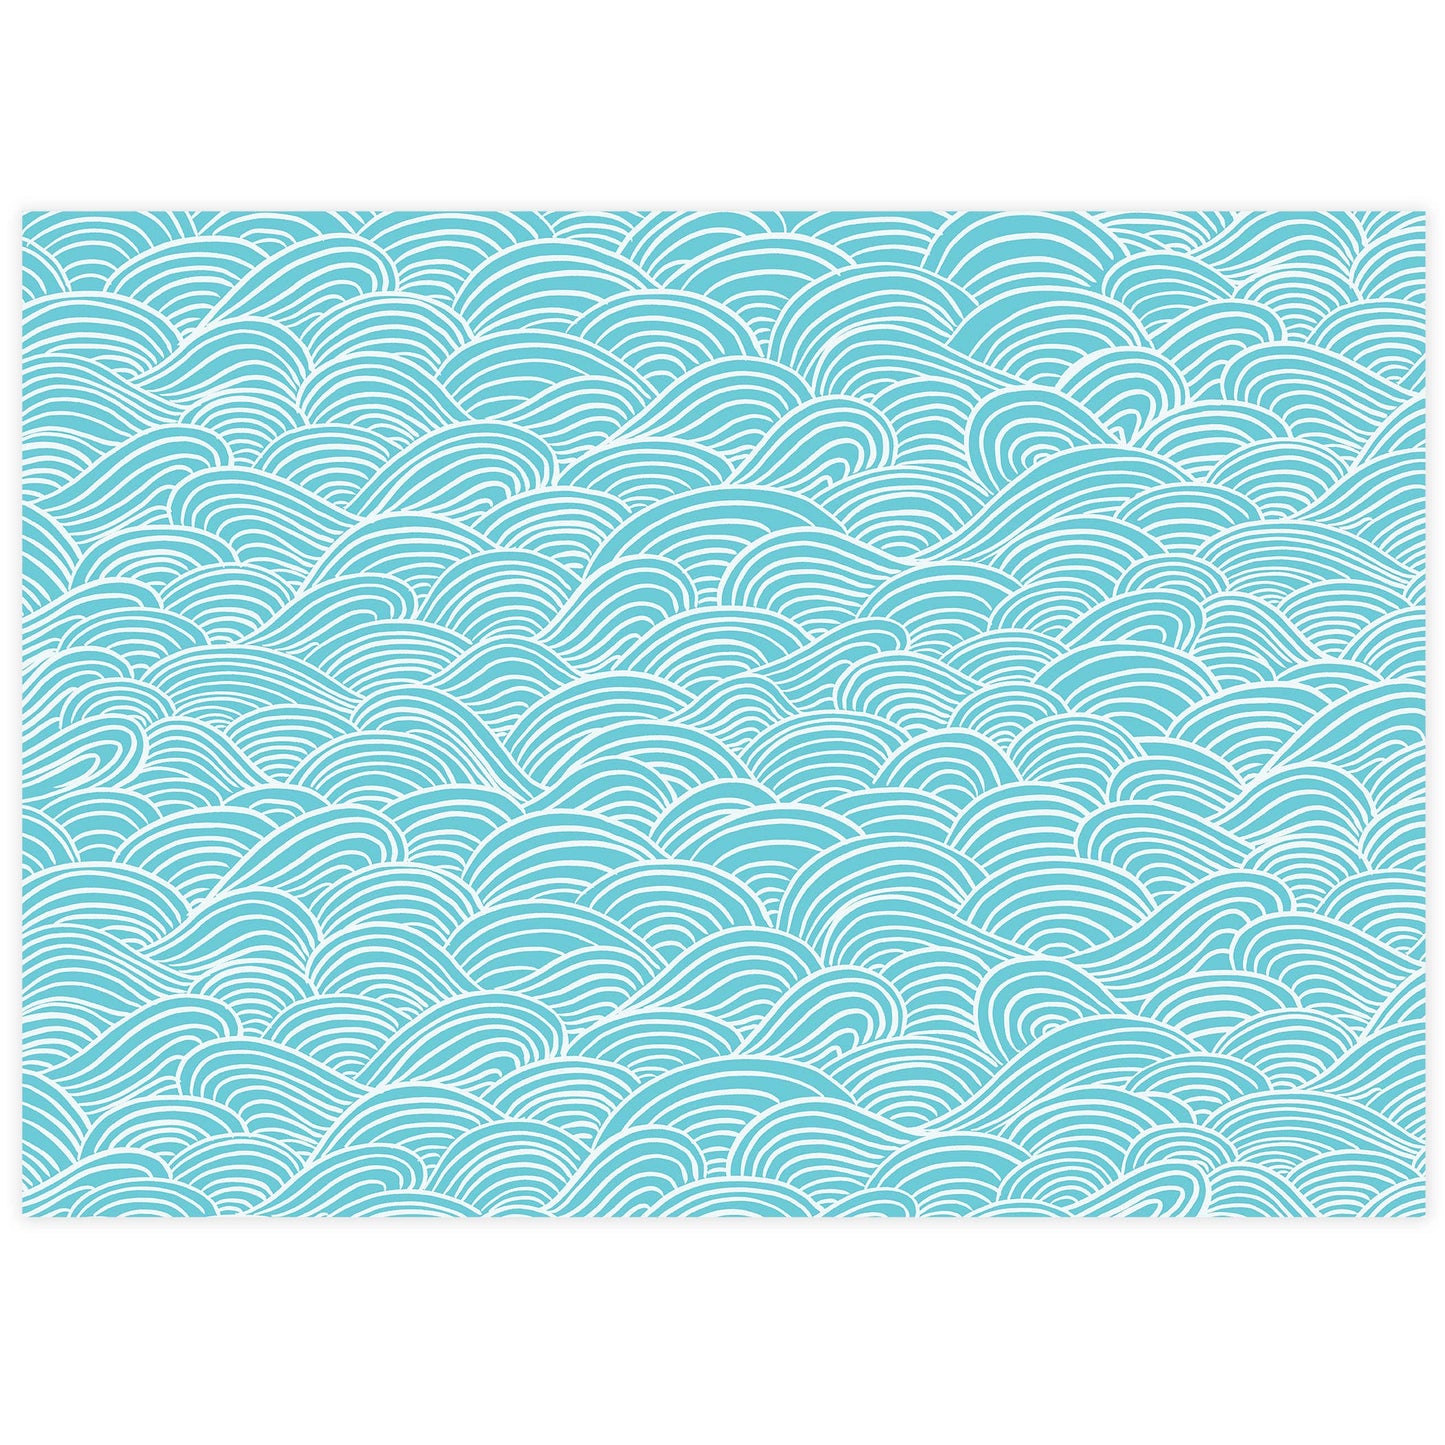 Waves Tissue Paper